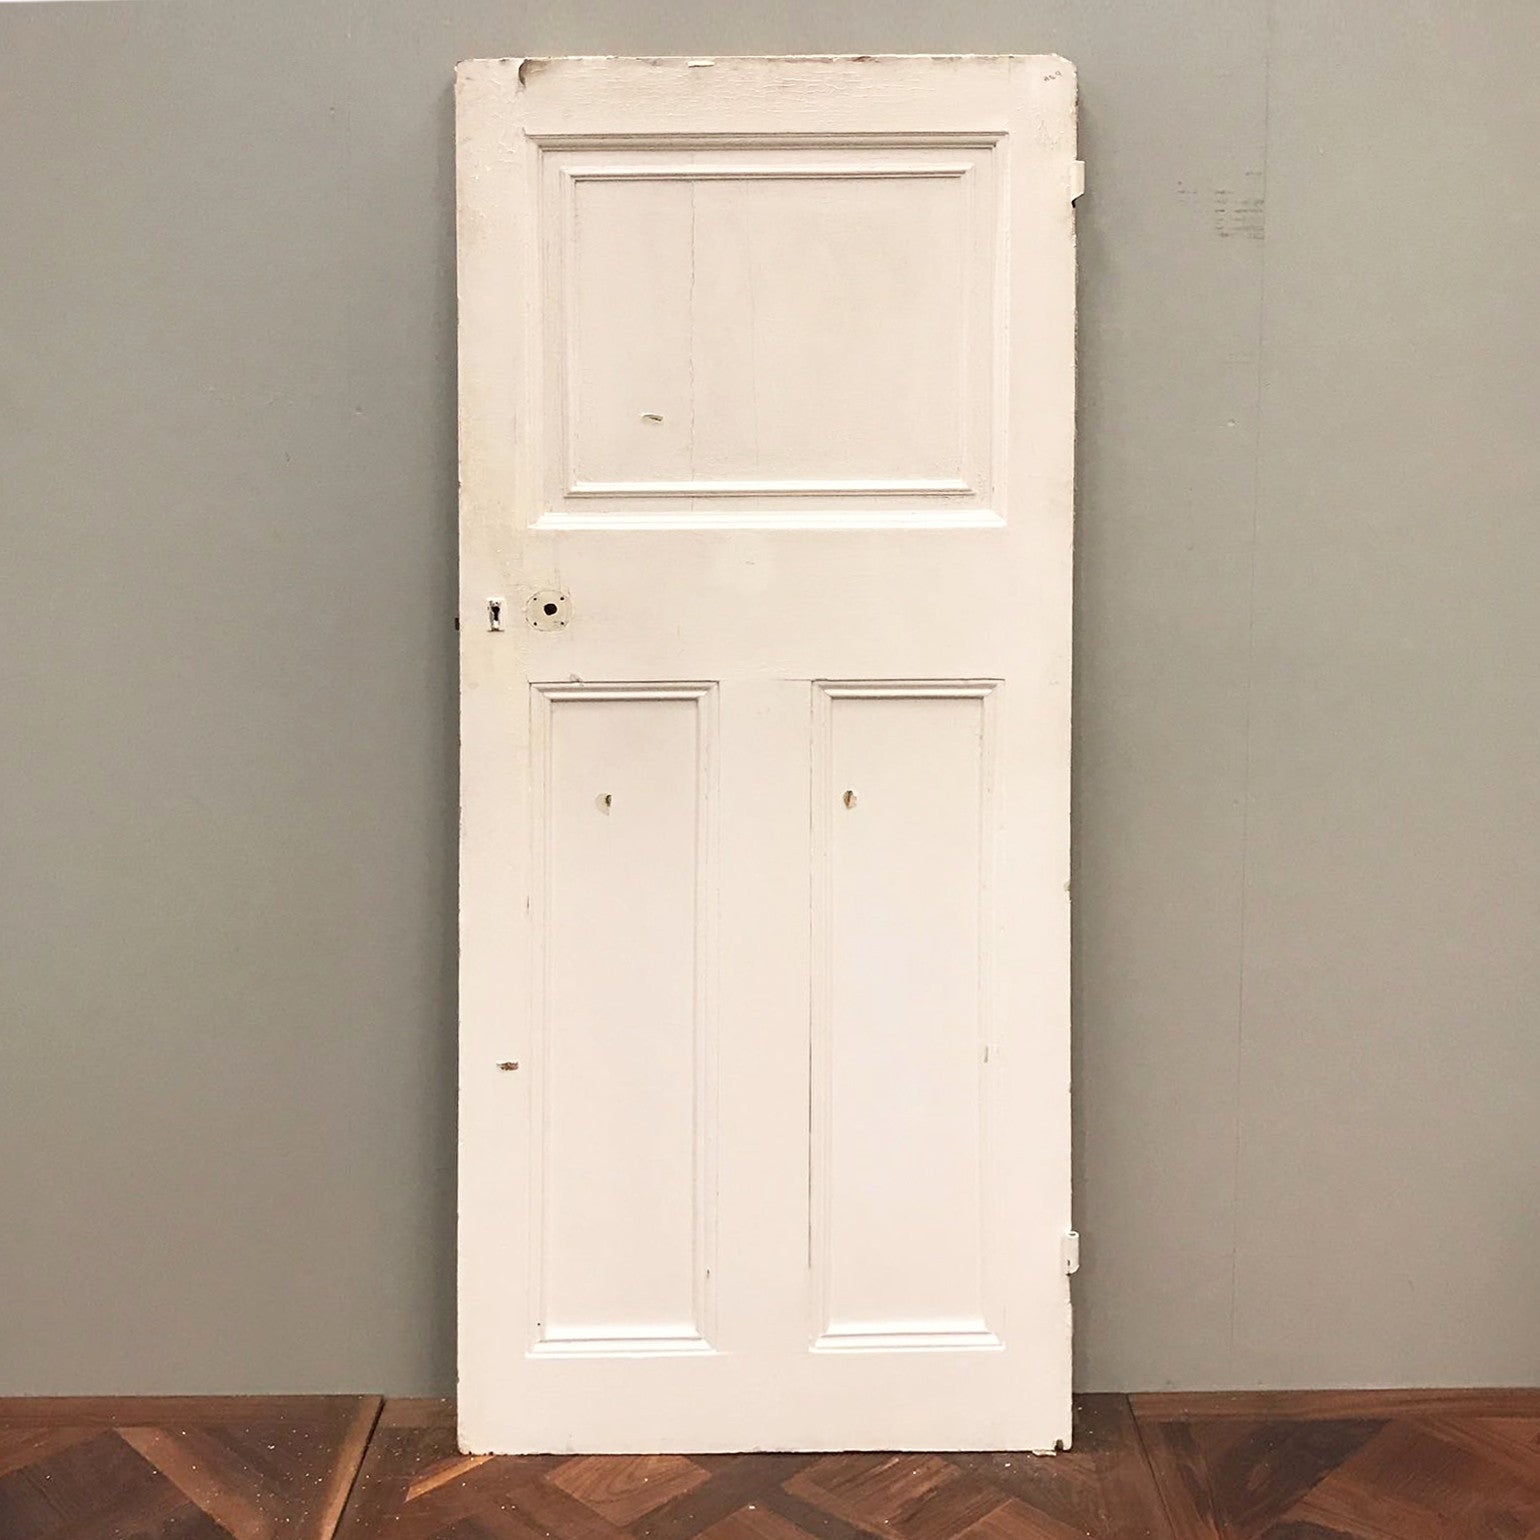 Antique Edwardian Three Panel Door - 200cm x 80cm x 4.5cm | The Architectural Forum